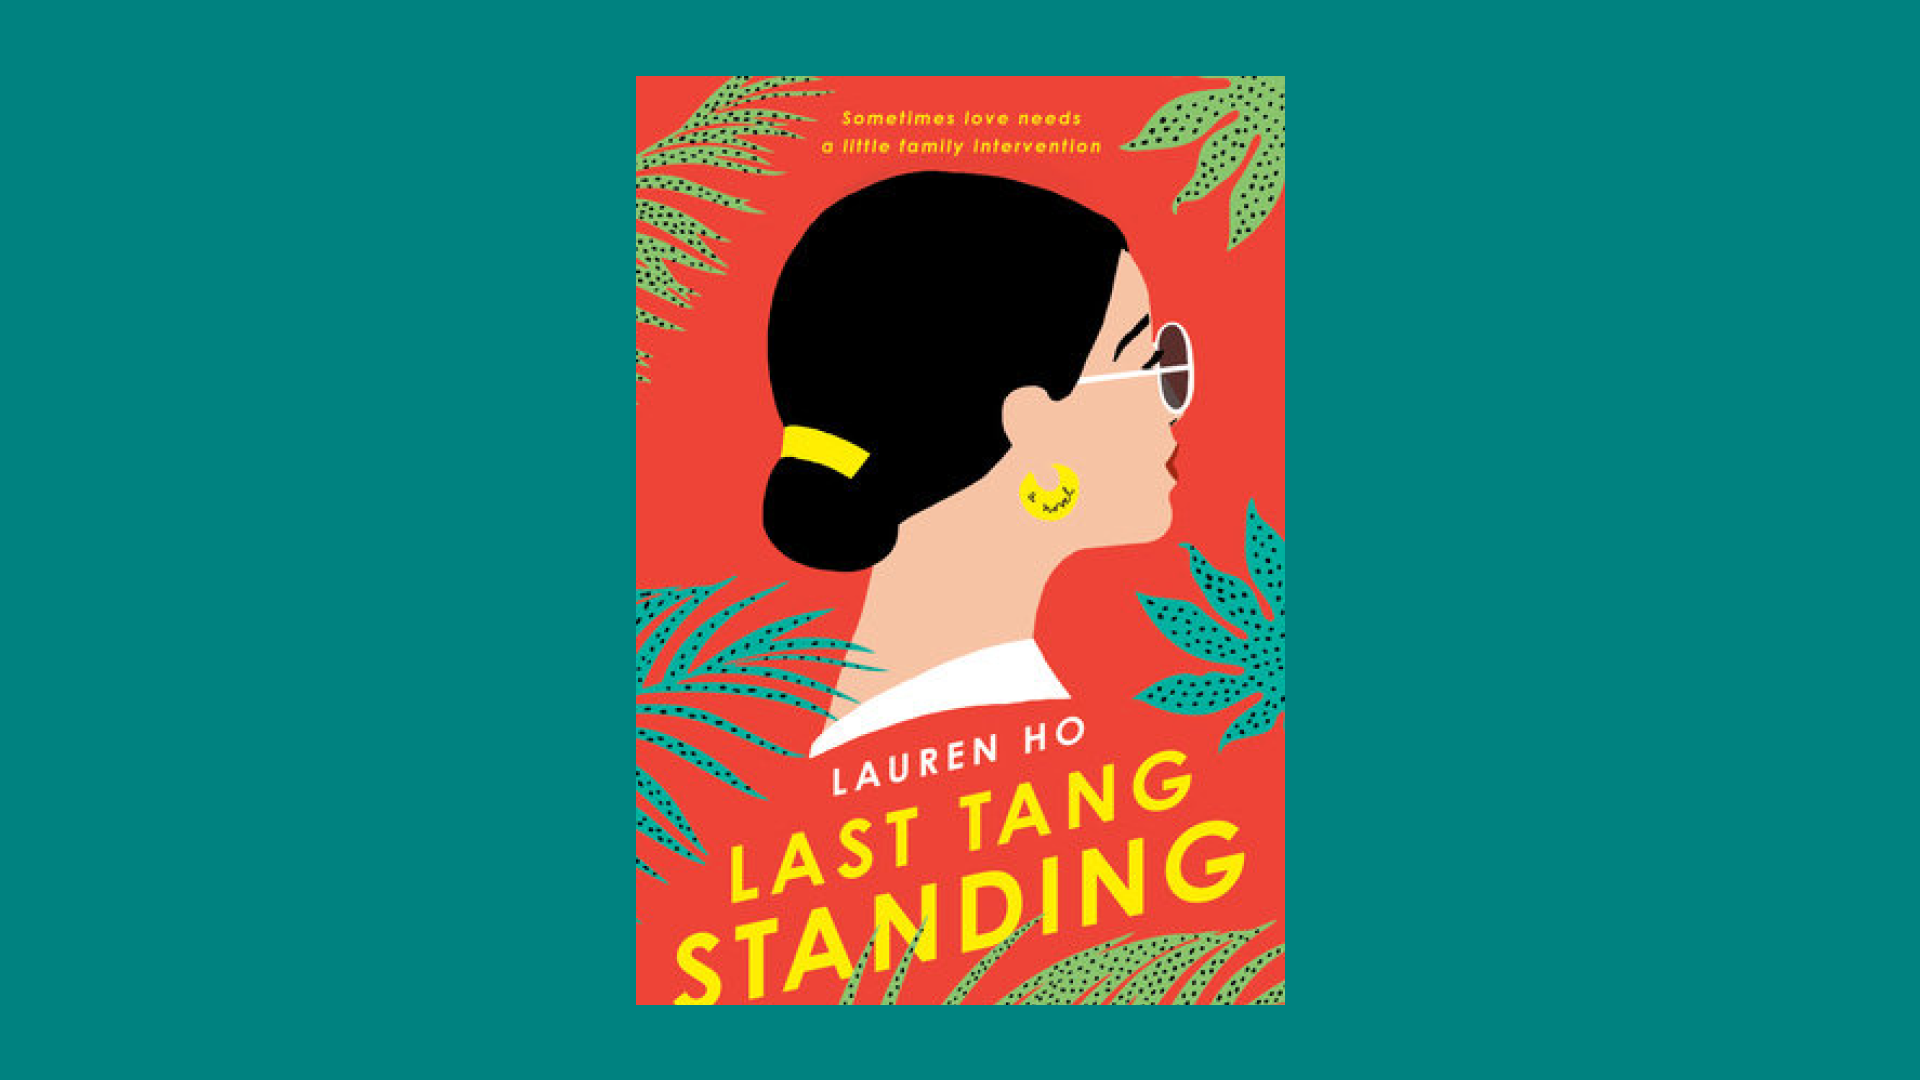 "Last Tang Standing” by Lauren Ho